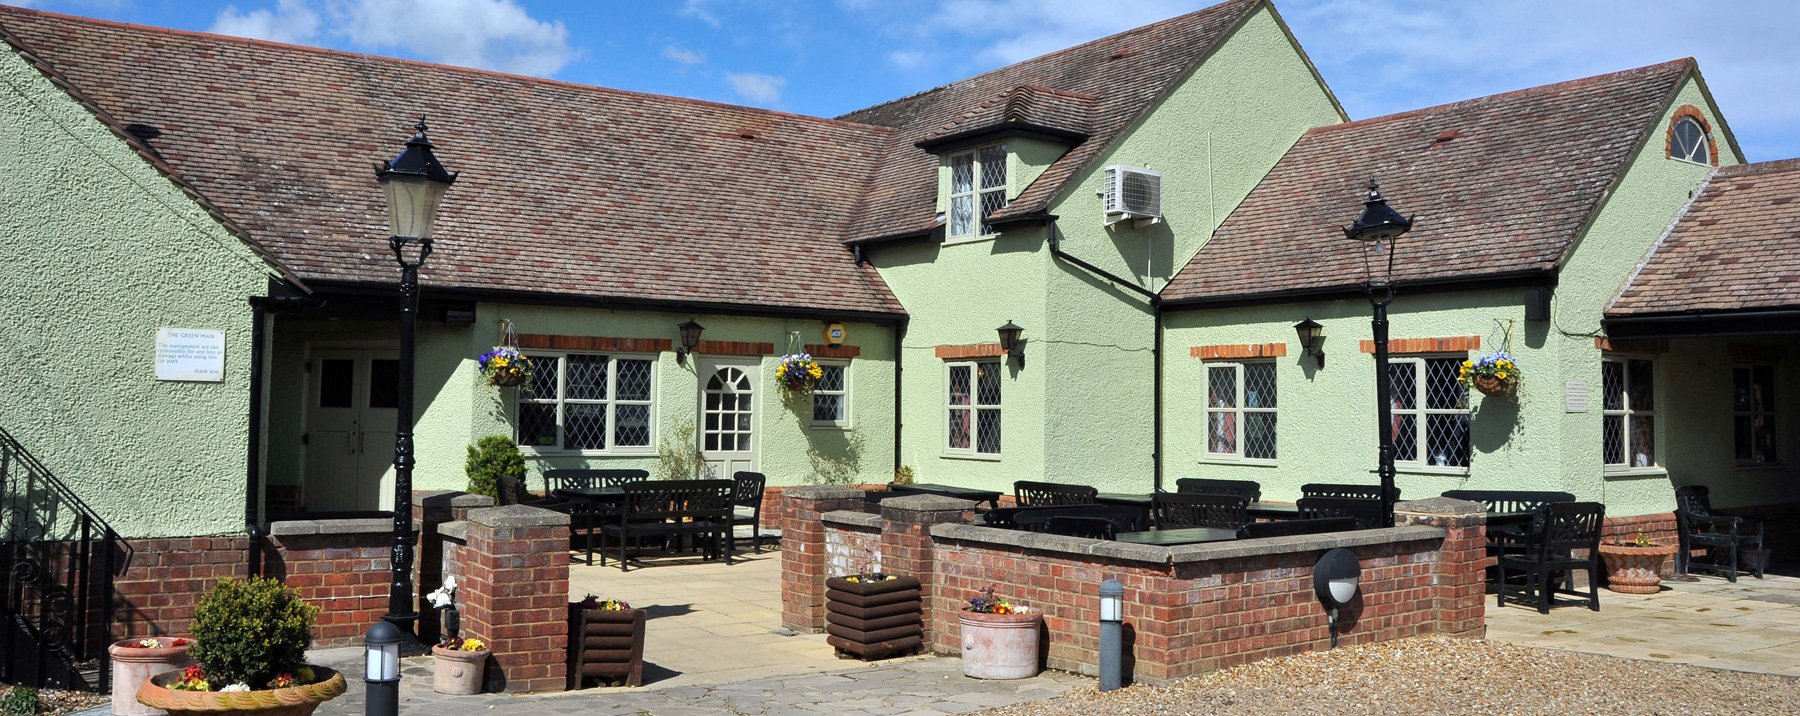 Photo of The Green Man Inn, Bedfordshire